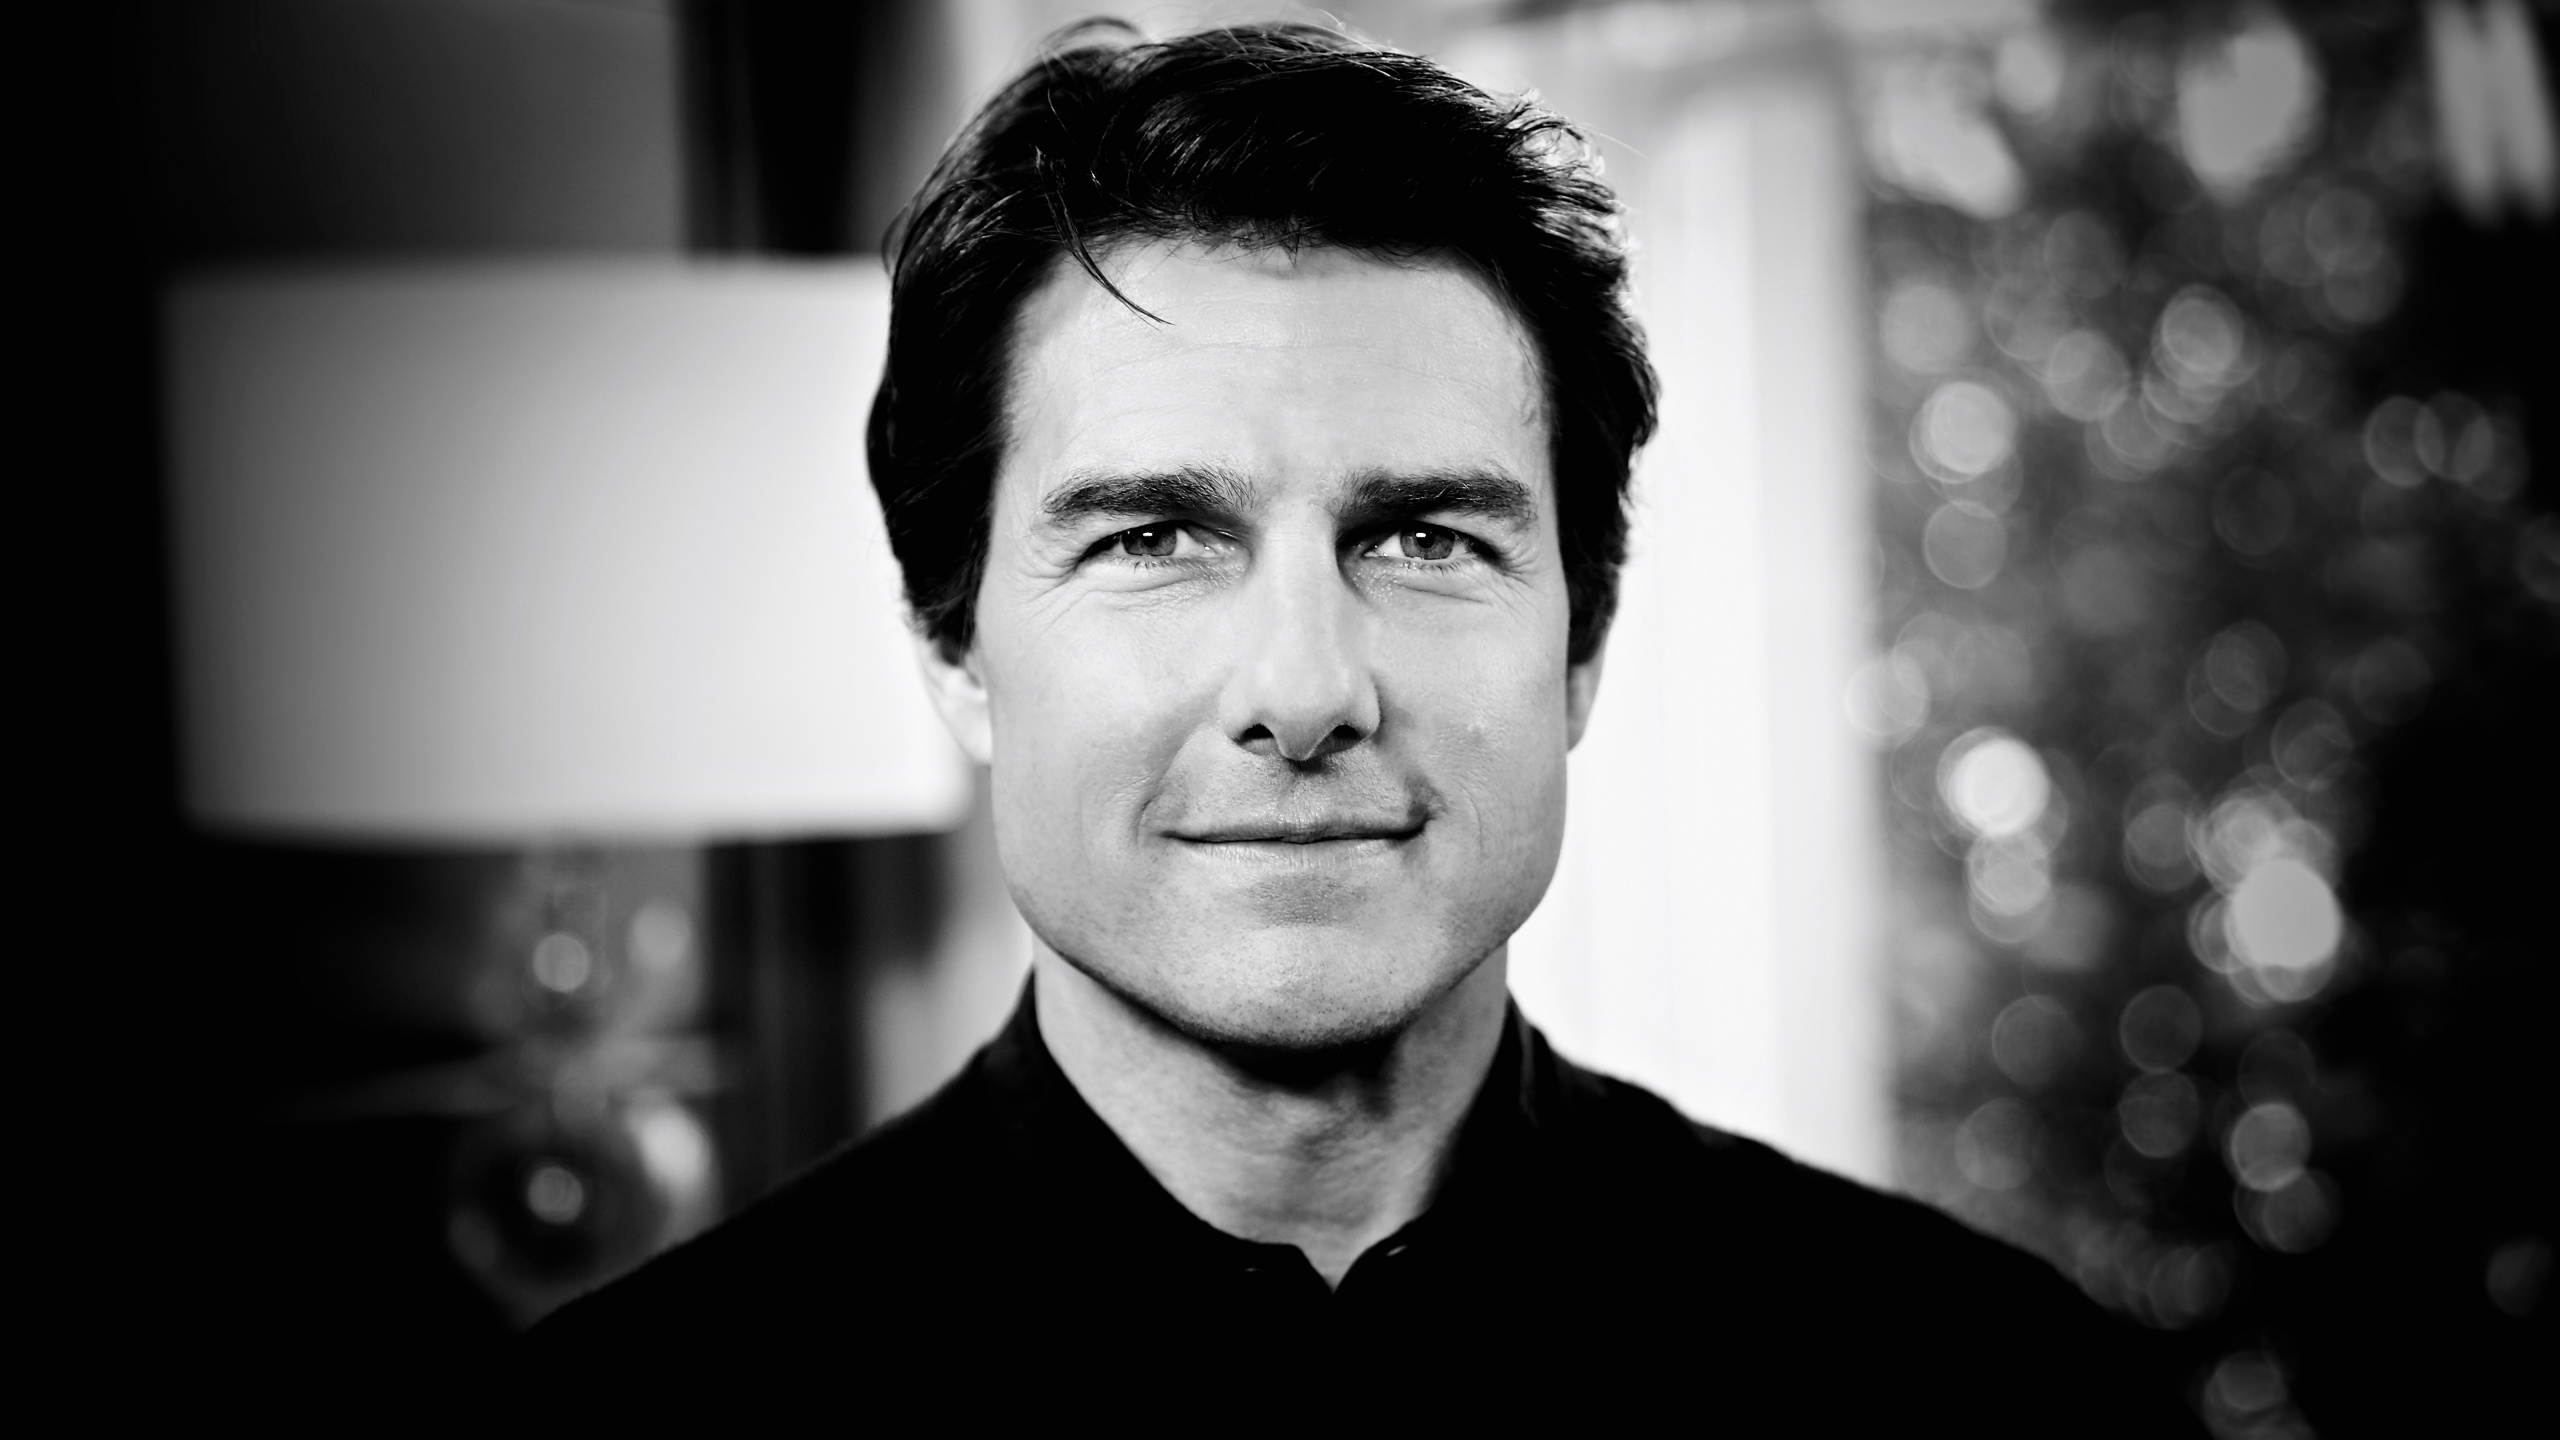 Tom Cruise, Noir et Blanc, Portrait, Face, Menton. Wallpaper in 2560x1440 Resolution